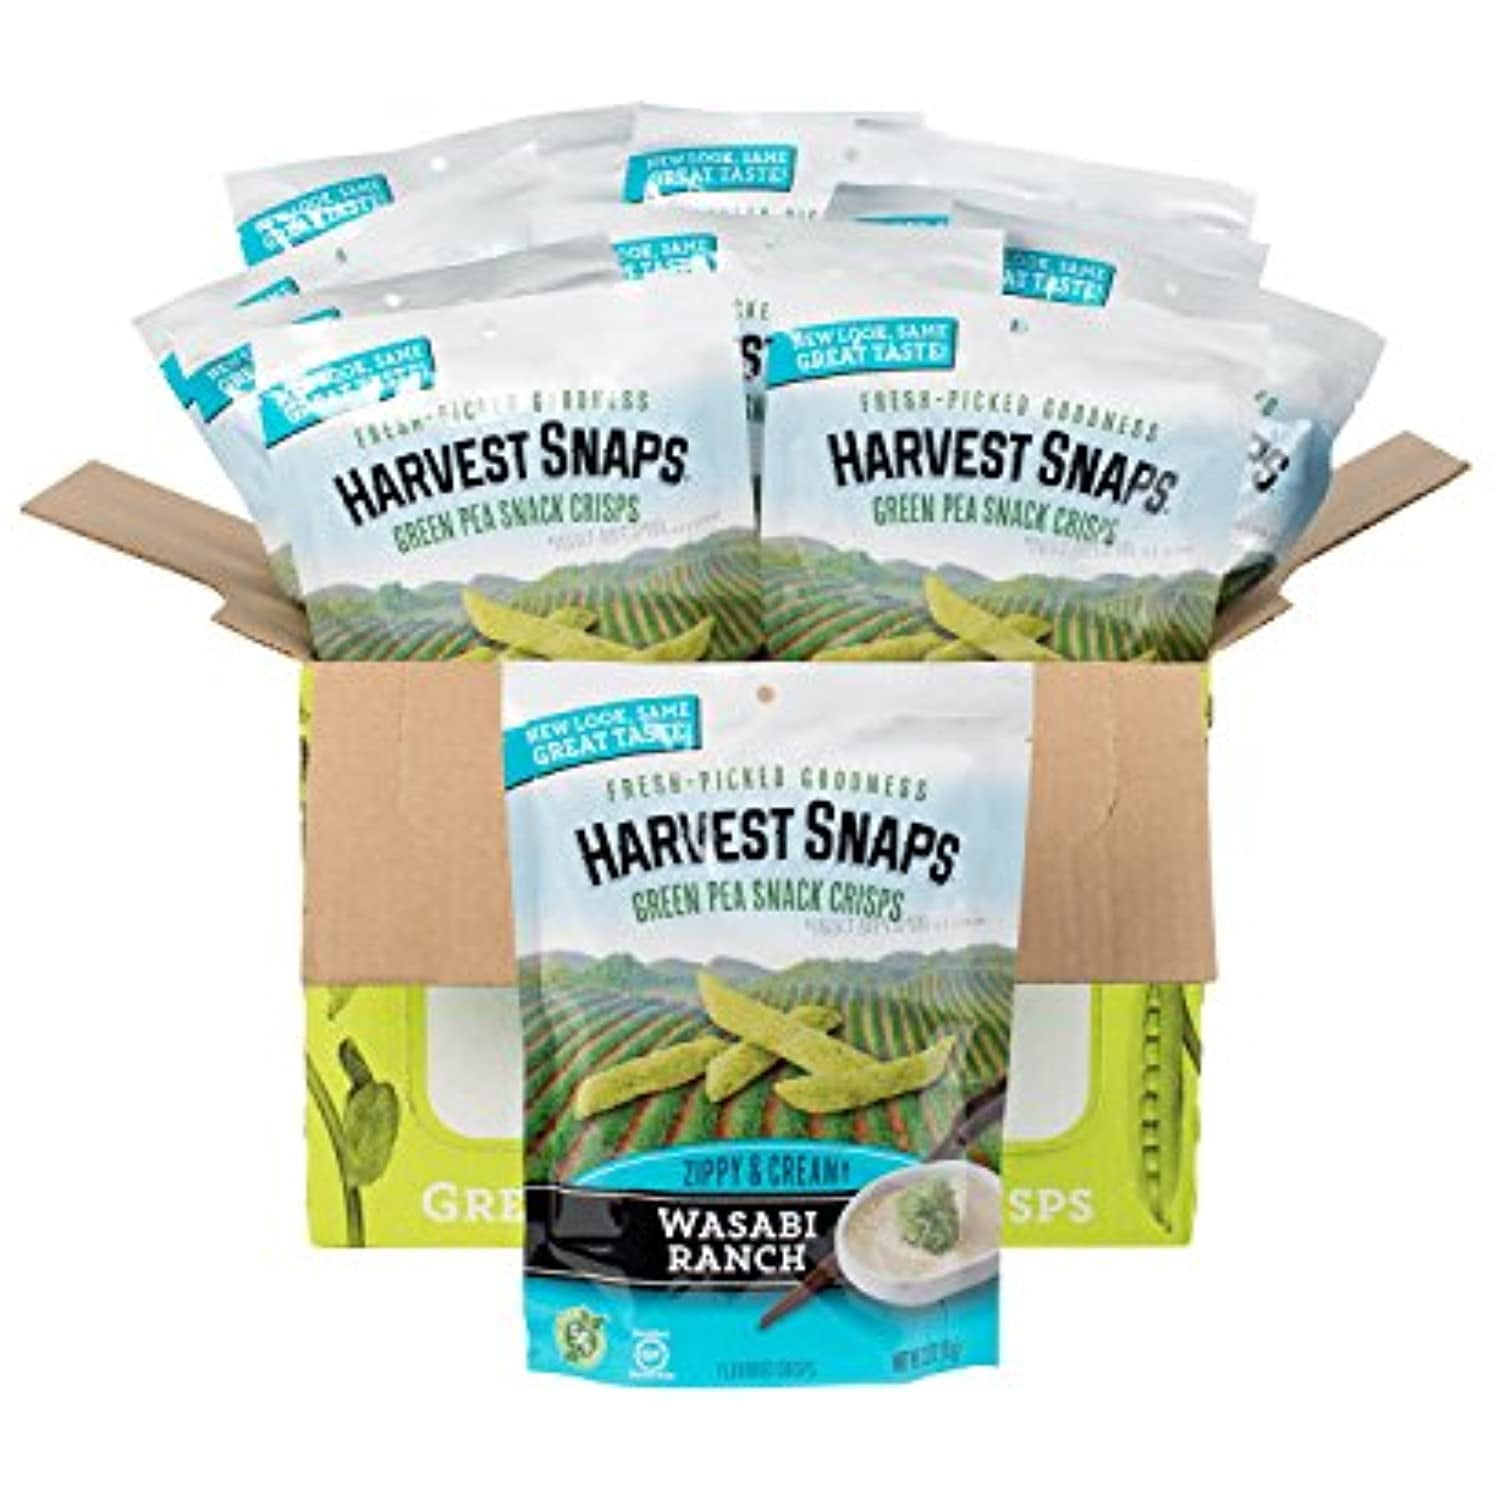 Harvest Snaps Snapea Crisps Lightly Salted - Pack of 3, 3.3 oz. ea.